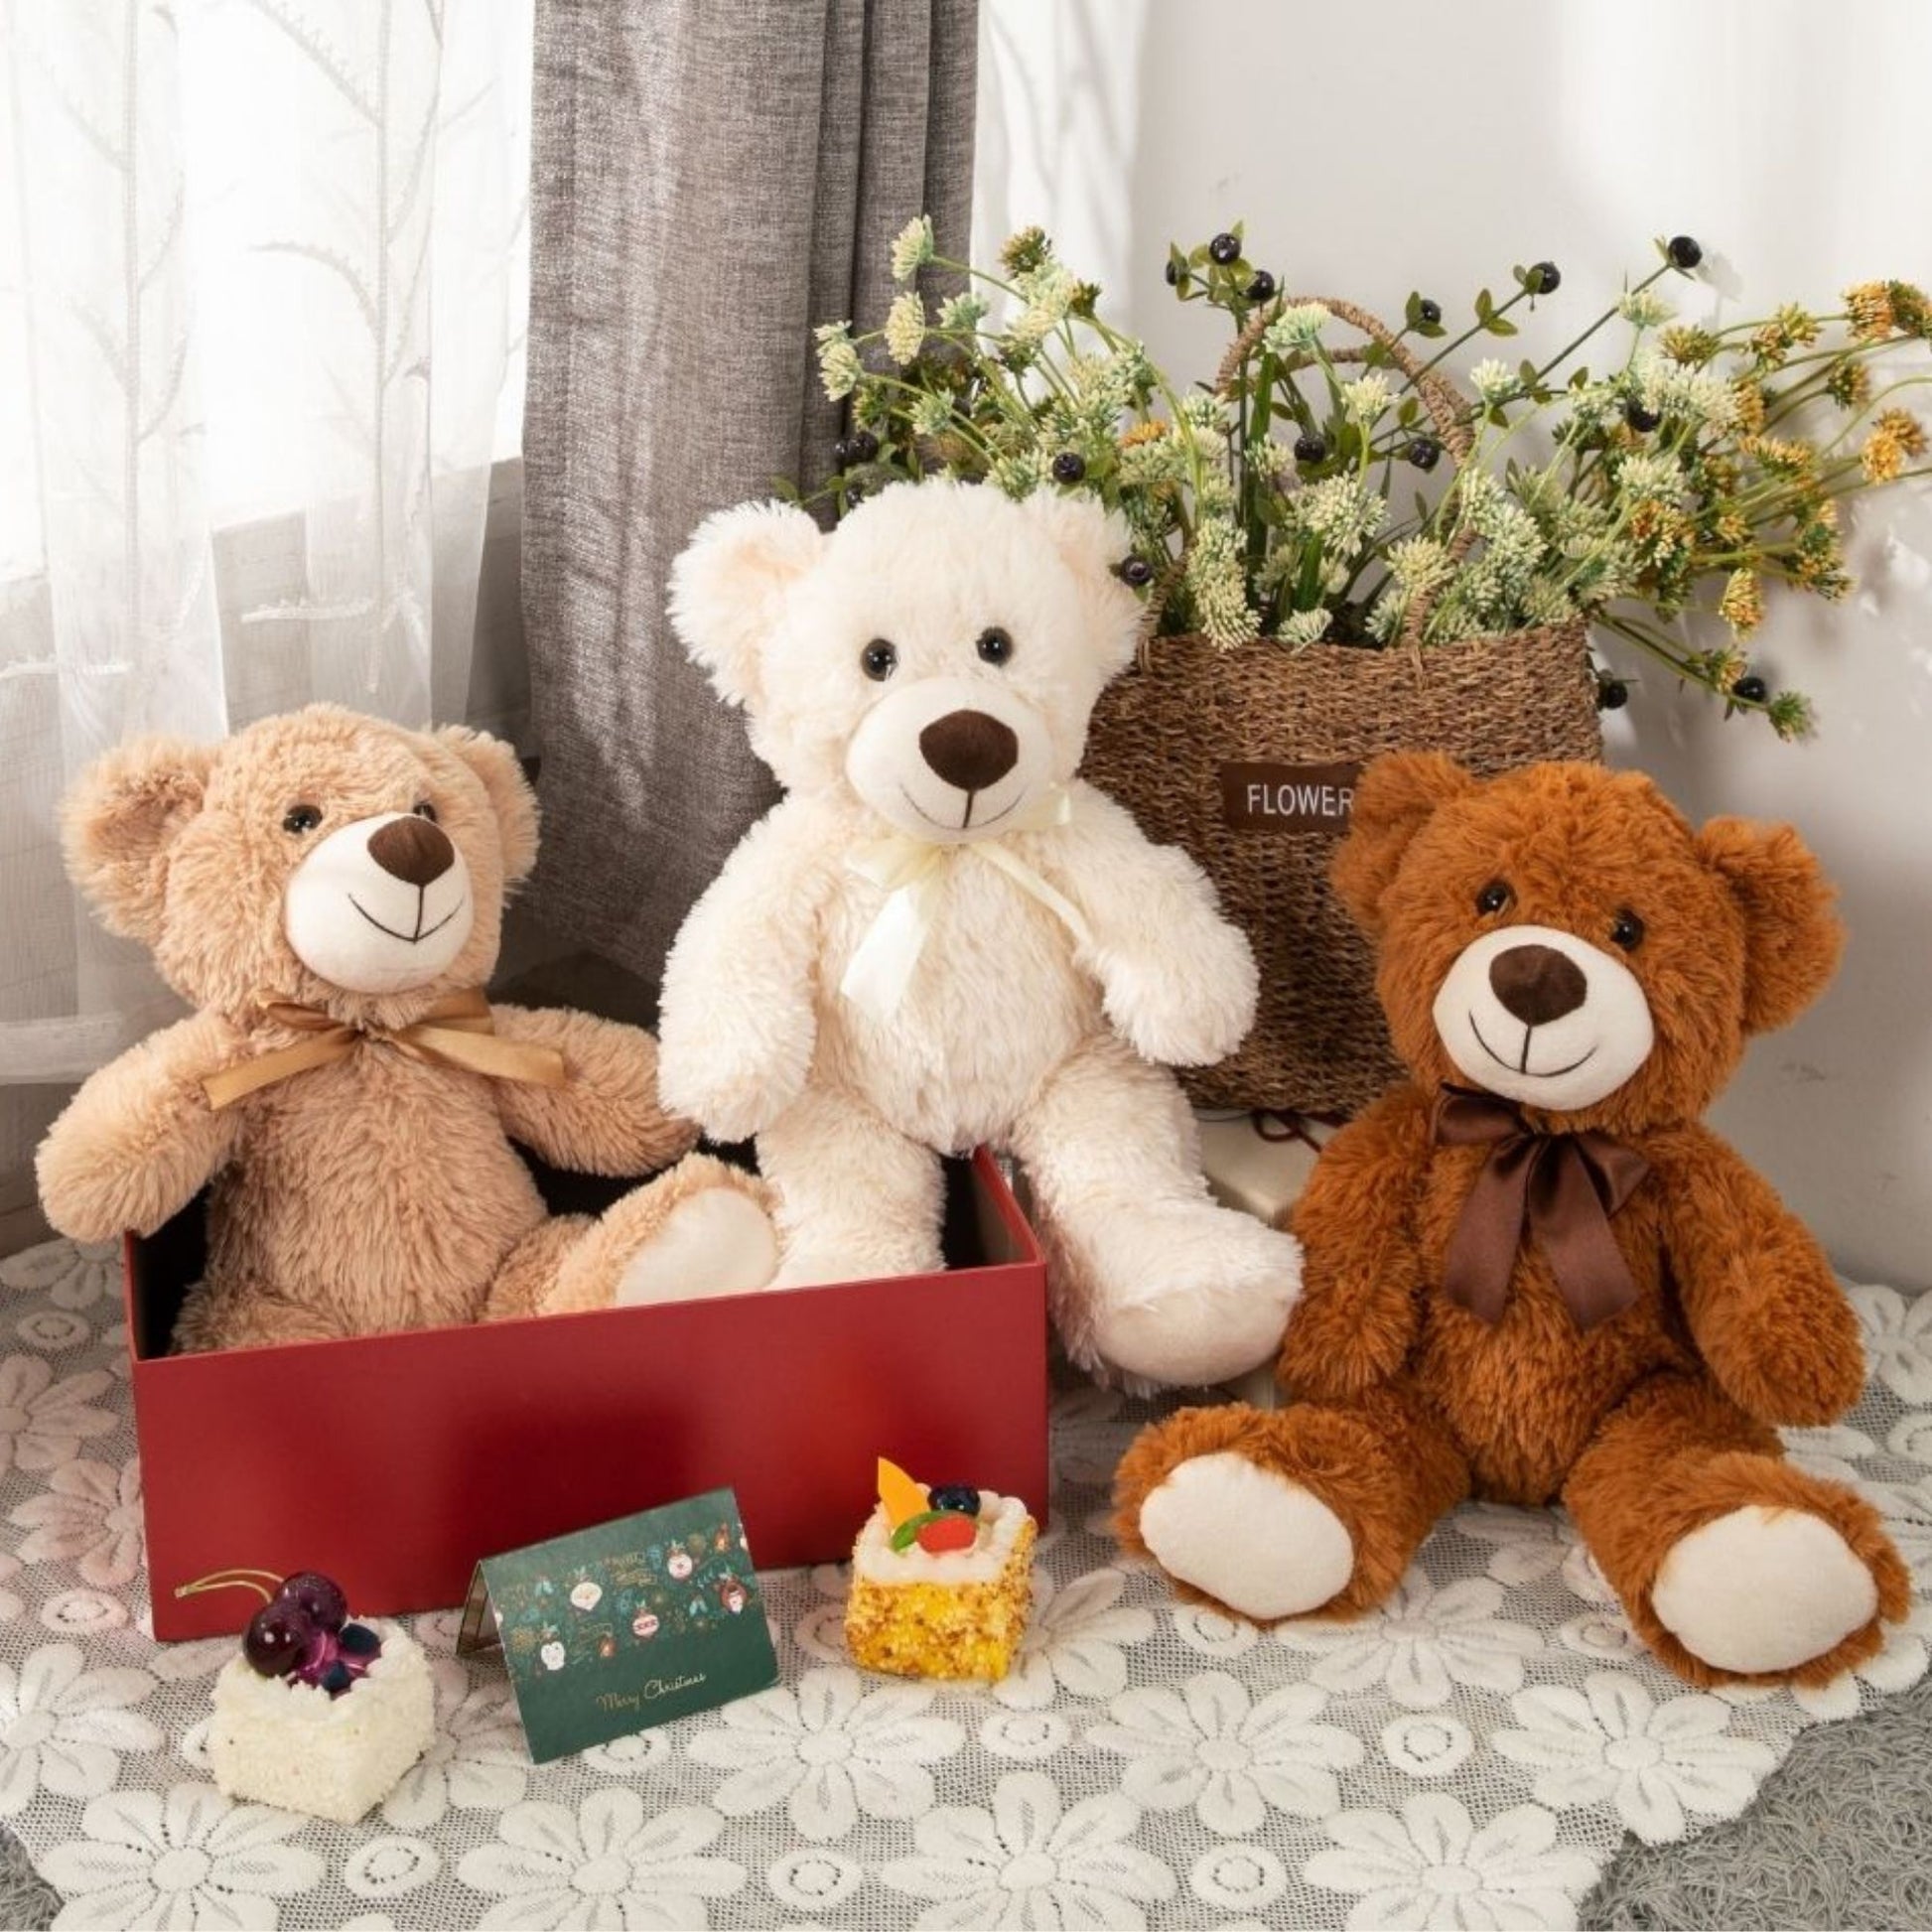 3er-Pack Teddybären, Beige/Hellbraun/Dunkelbraun, 13,8''